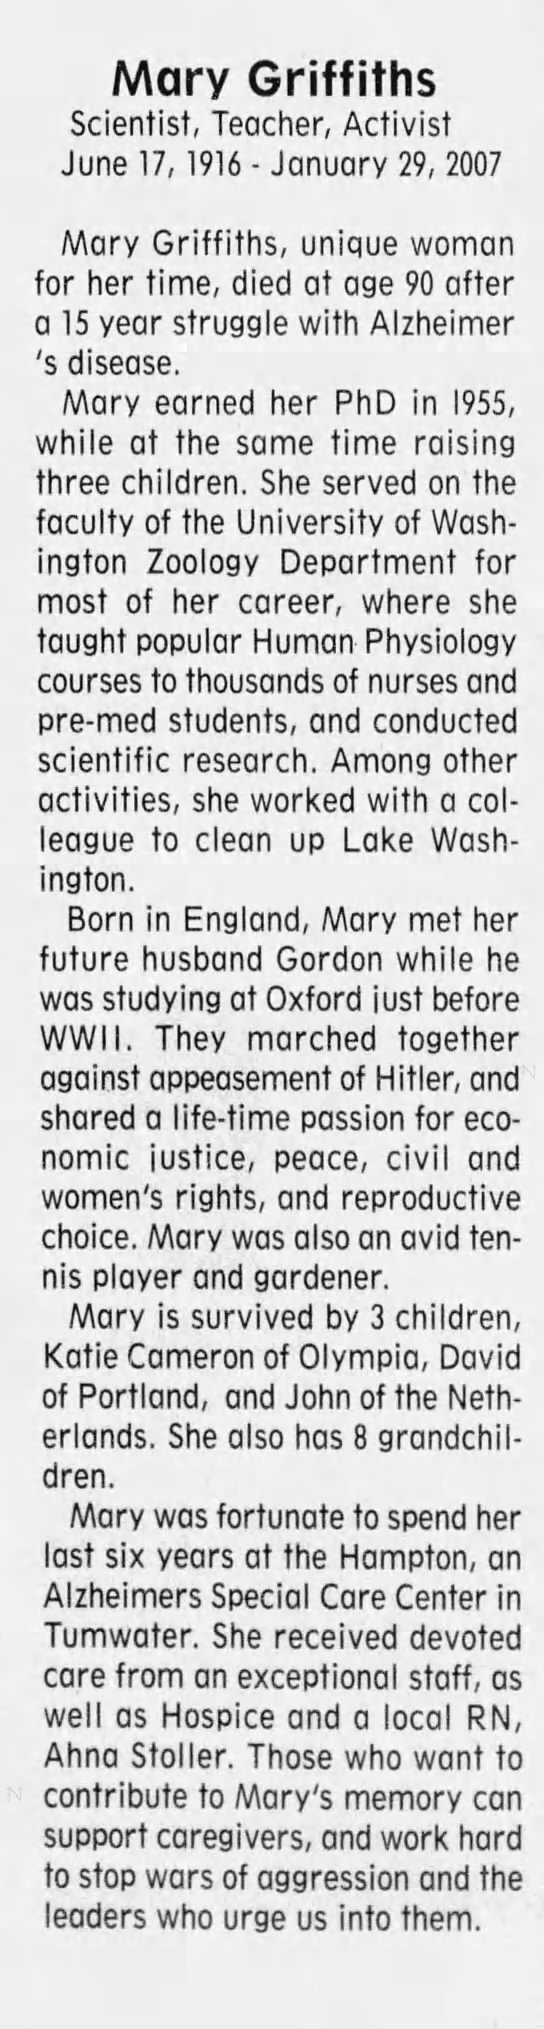 Mary Griffiths
Scientist, Teacher, Activist